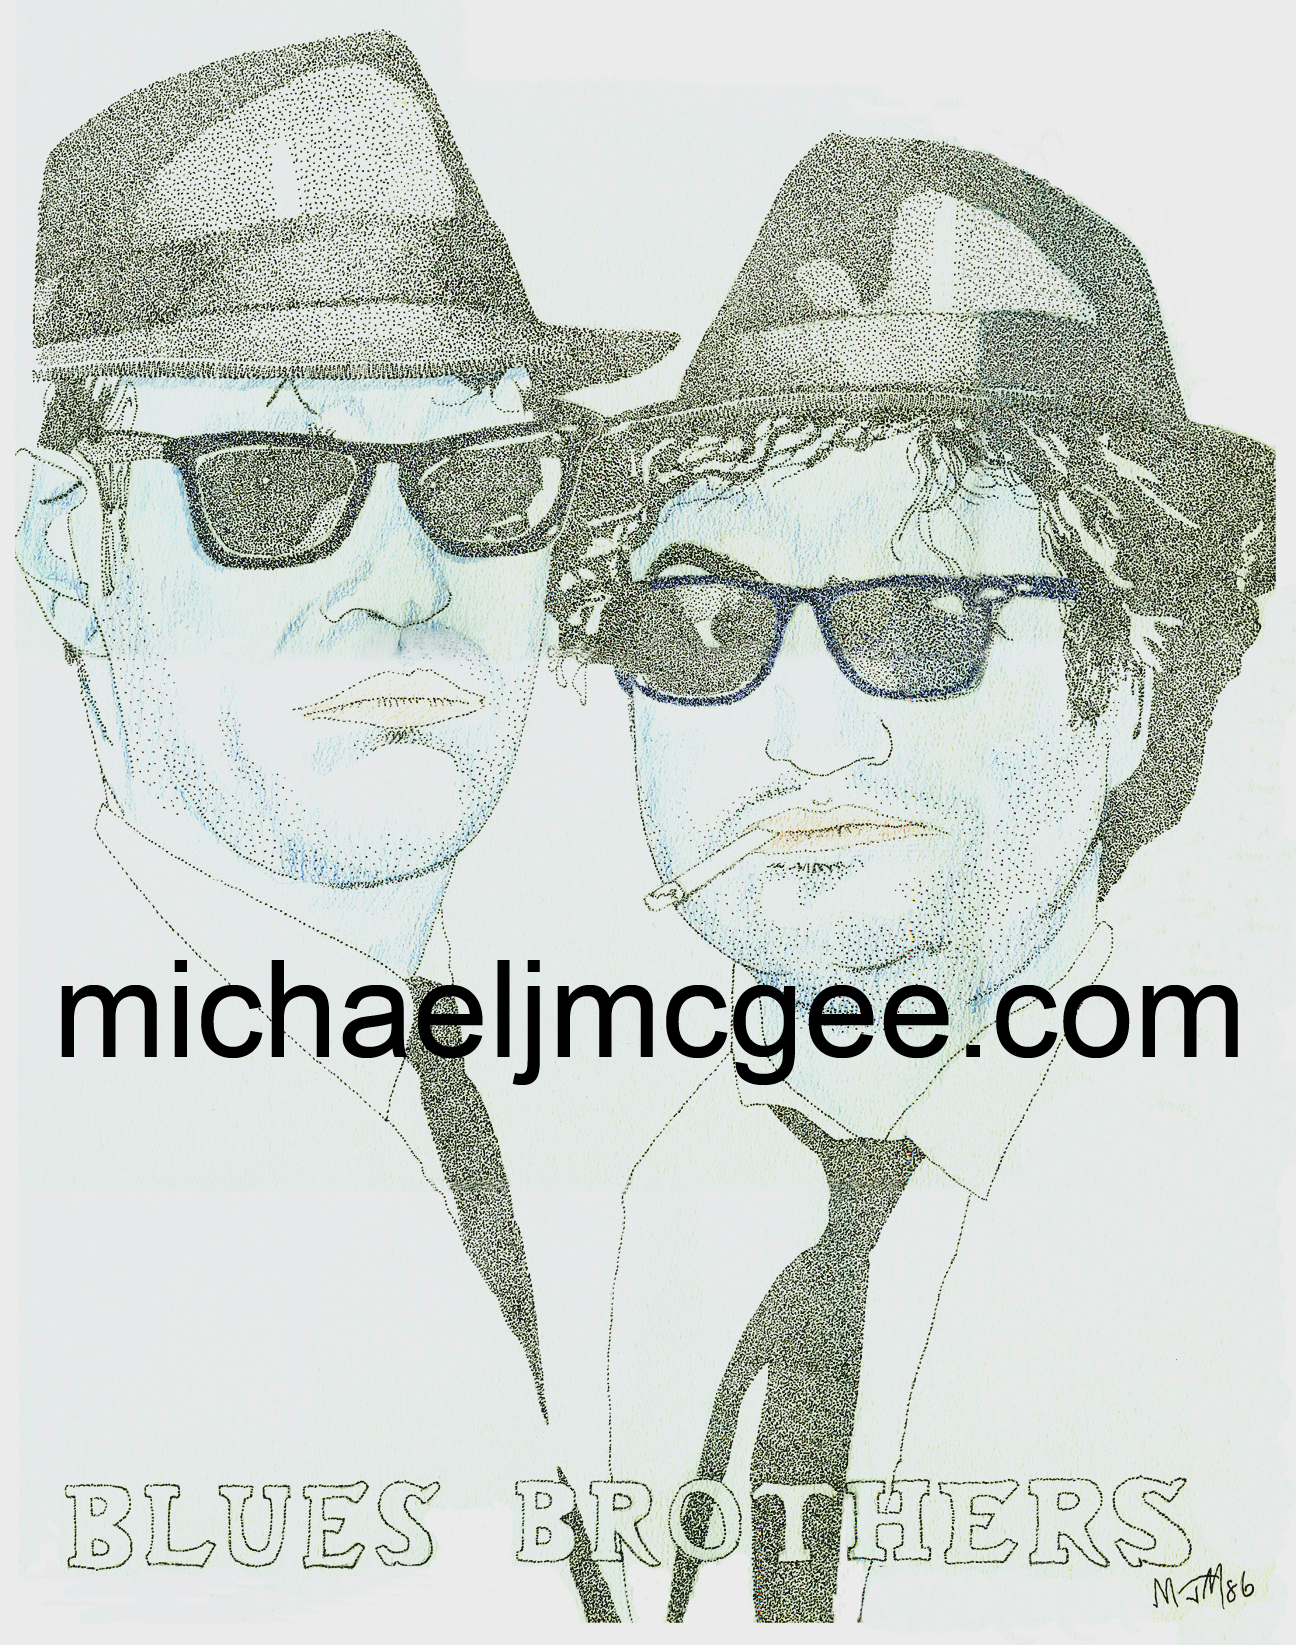 The Blues Brothers / MJM Artworks / michaeljmcgee.com